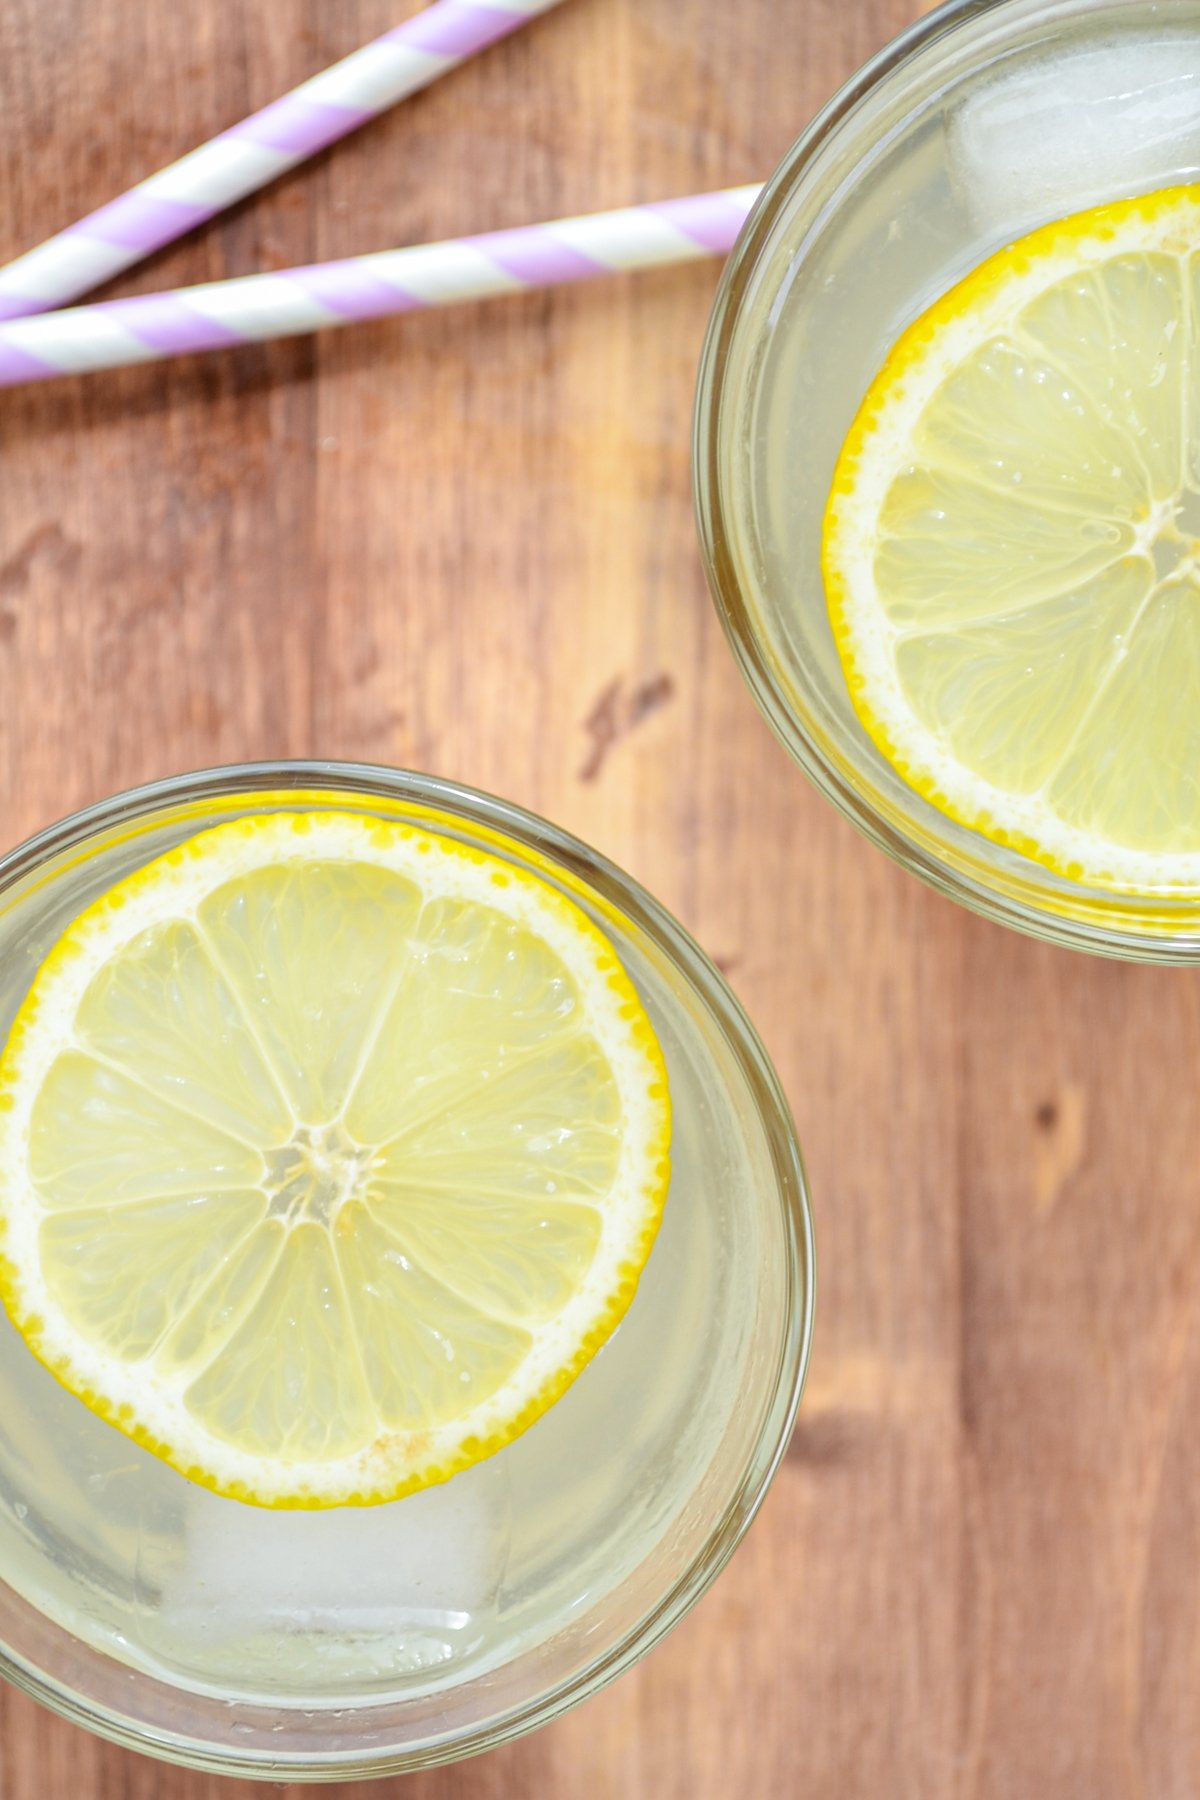 Two glasses of lemonade, garnished with lemon slices.